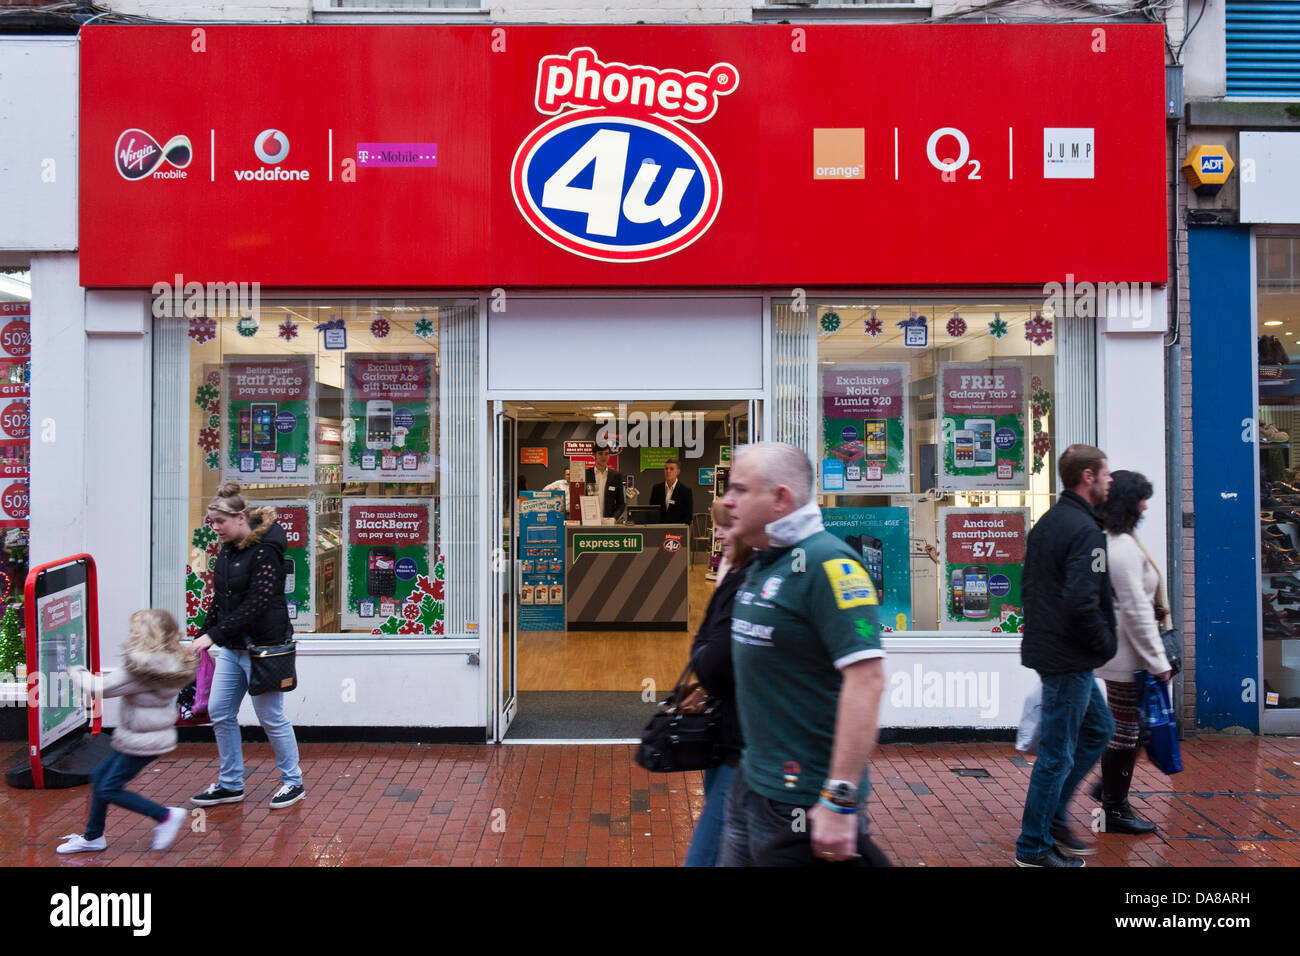 UK mobile phone retailer, Phones 4 u storefront, Reading, Berkshire, GB, UK. Stock Photo